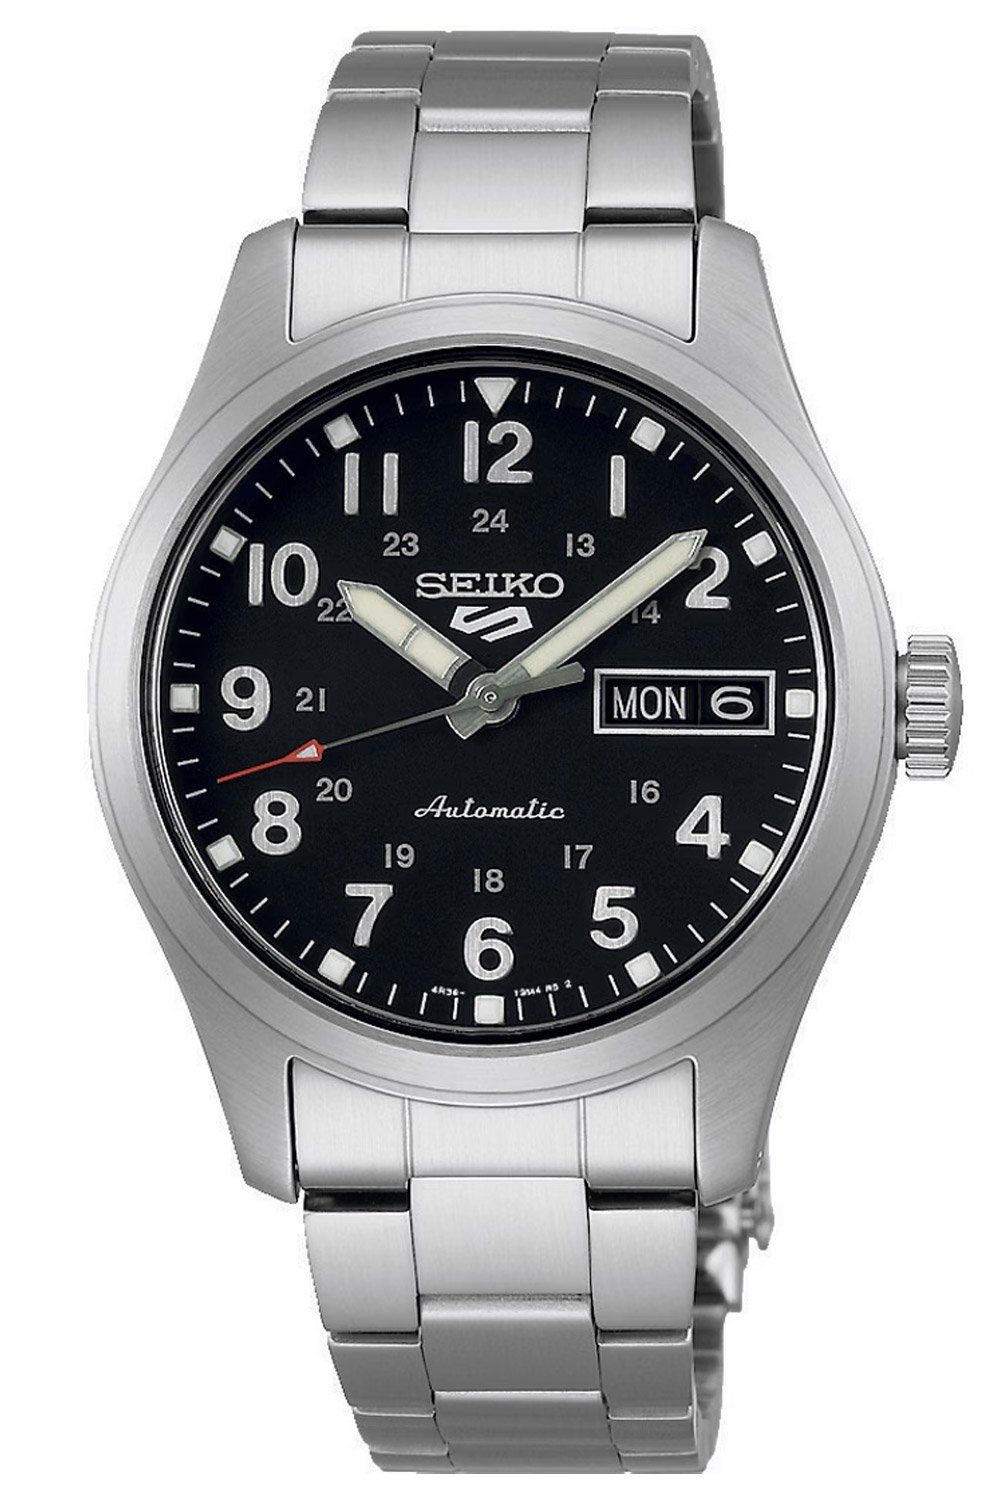 Seiko Men's Watch Automatic Steel/Black SRPJ81K1 • uhrcenter